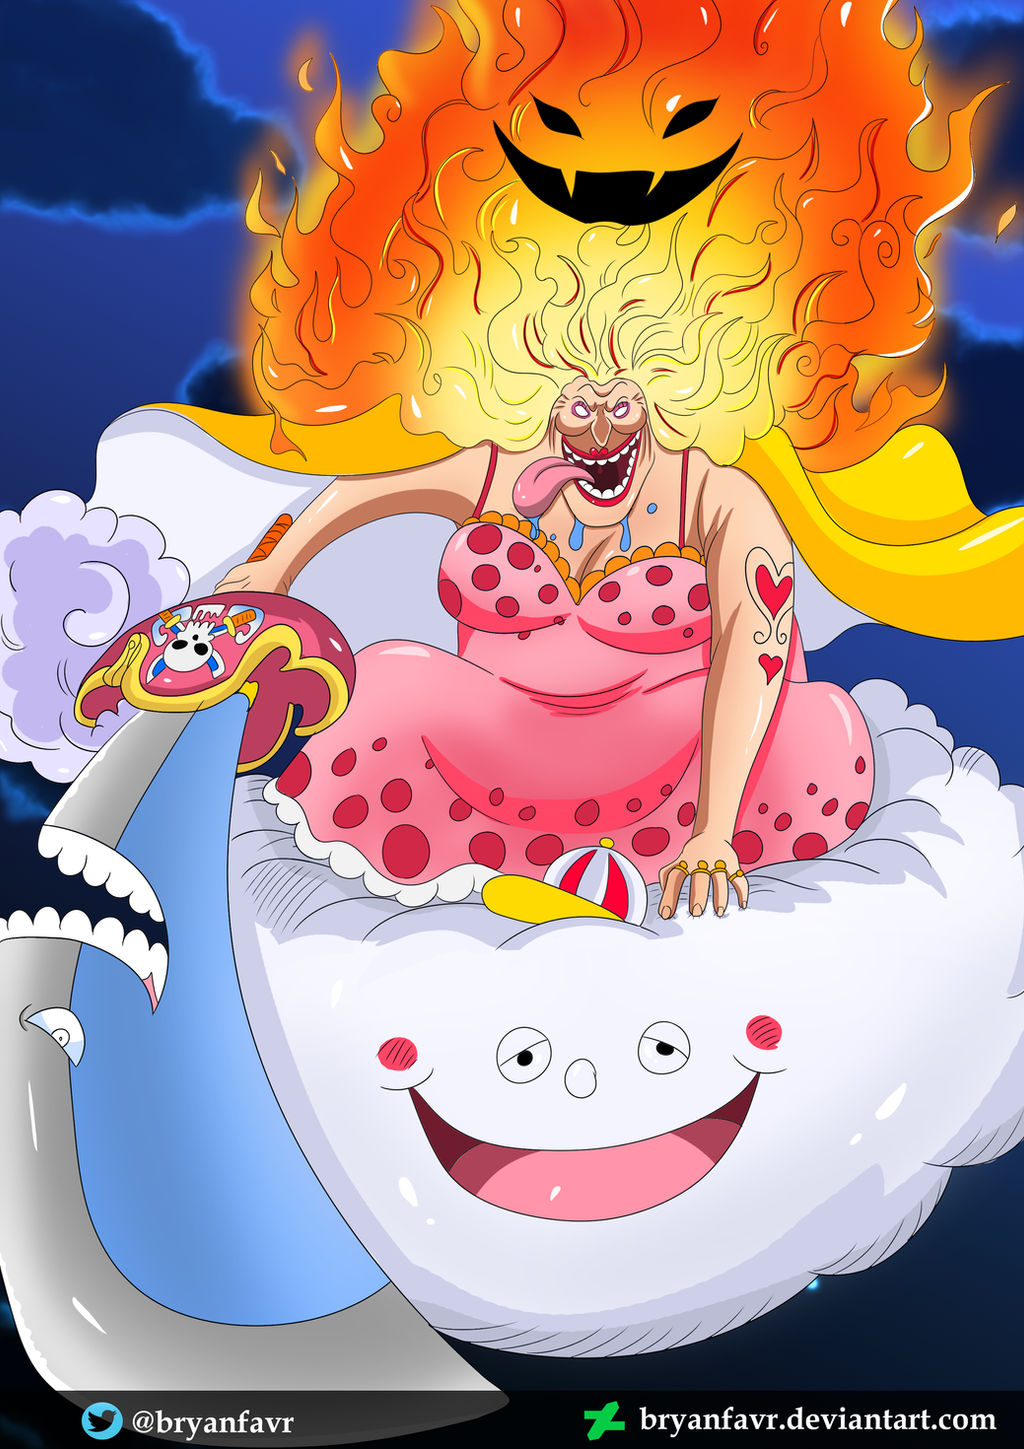 Big Mom (One Piece Ch. 889) by bryanfavr on DeviantArt